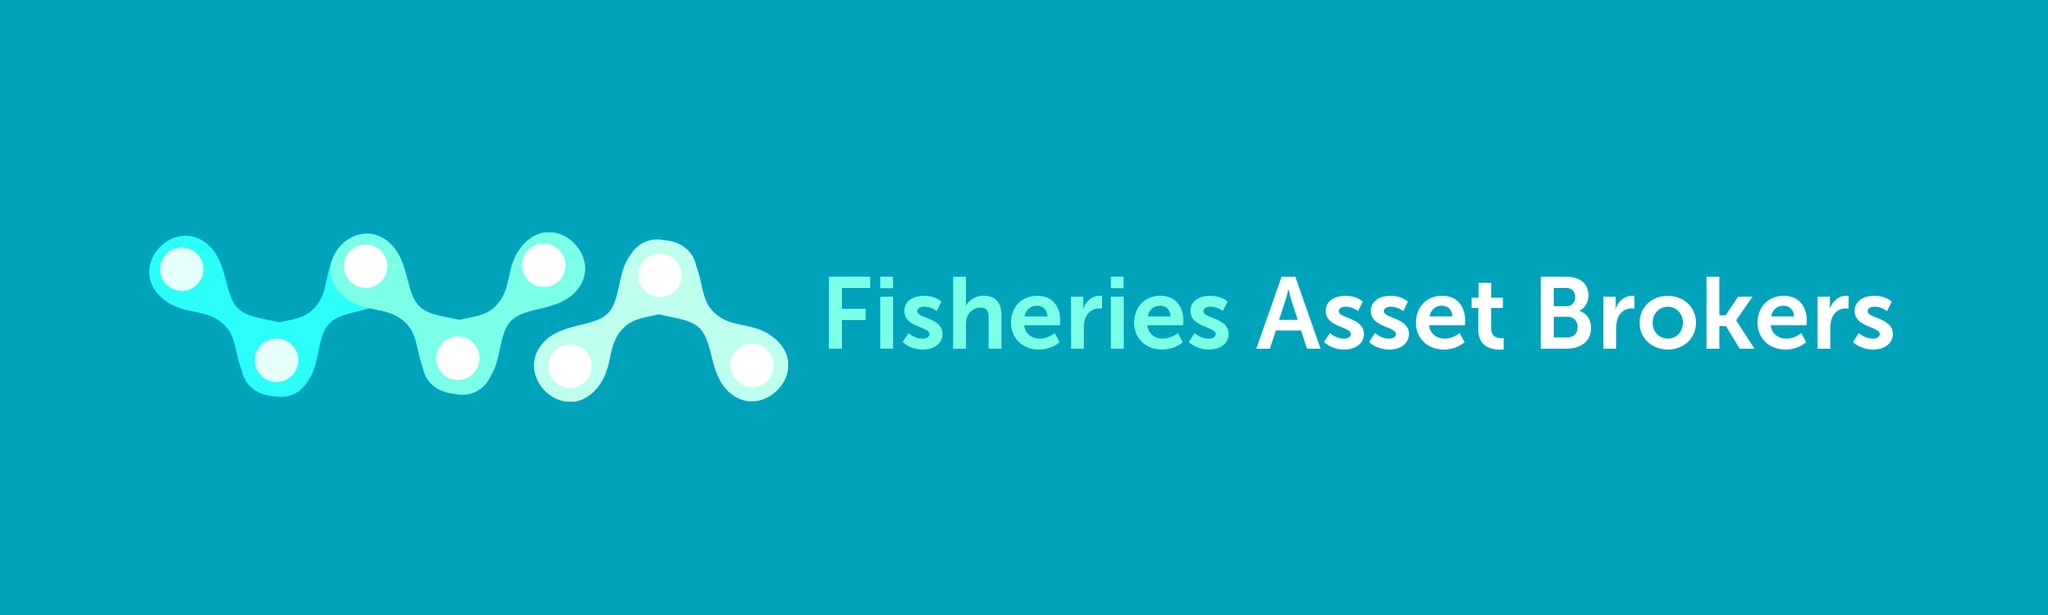 https://tunaaustralia.org.au/wp-content/uploads/2021/08/Fisheries-Asset-Brokers-Logo-Edit-300dpi-1-2.jpg